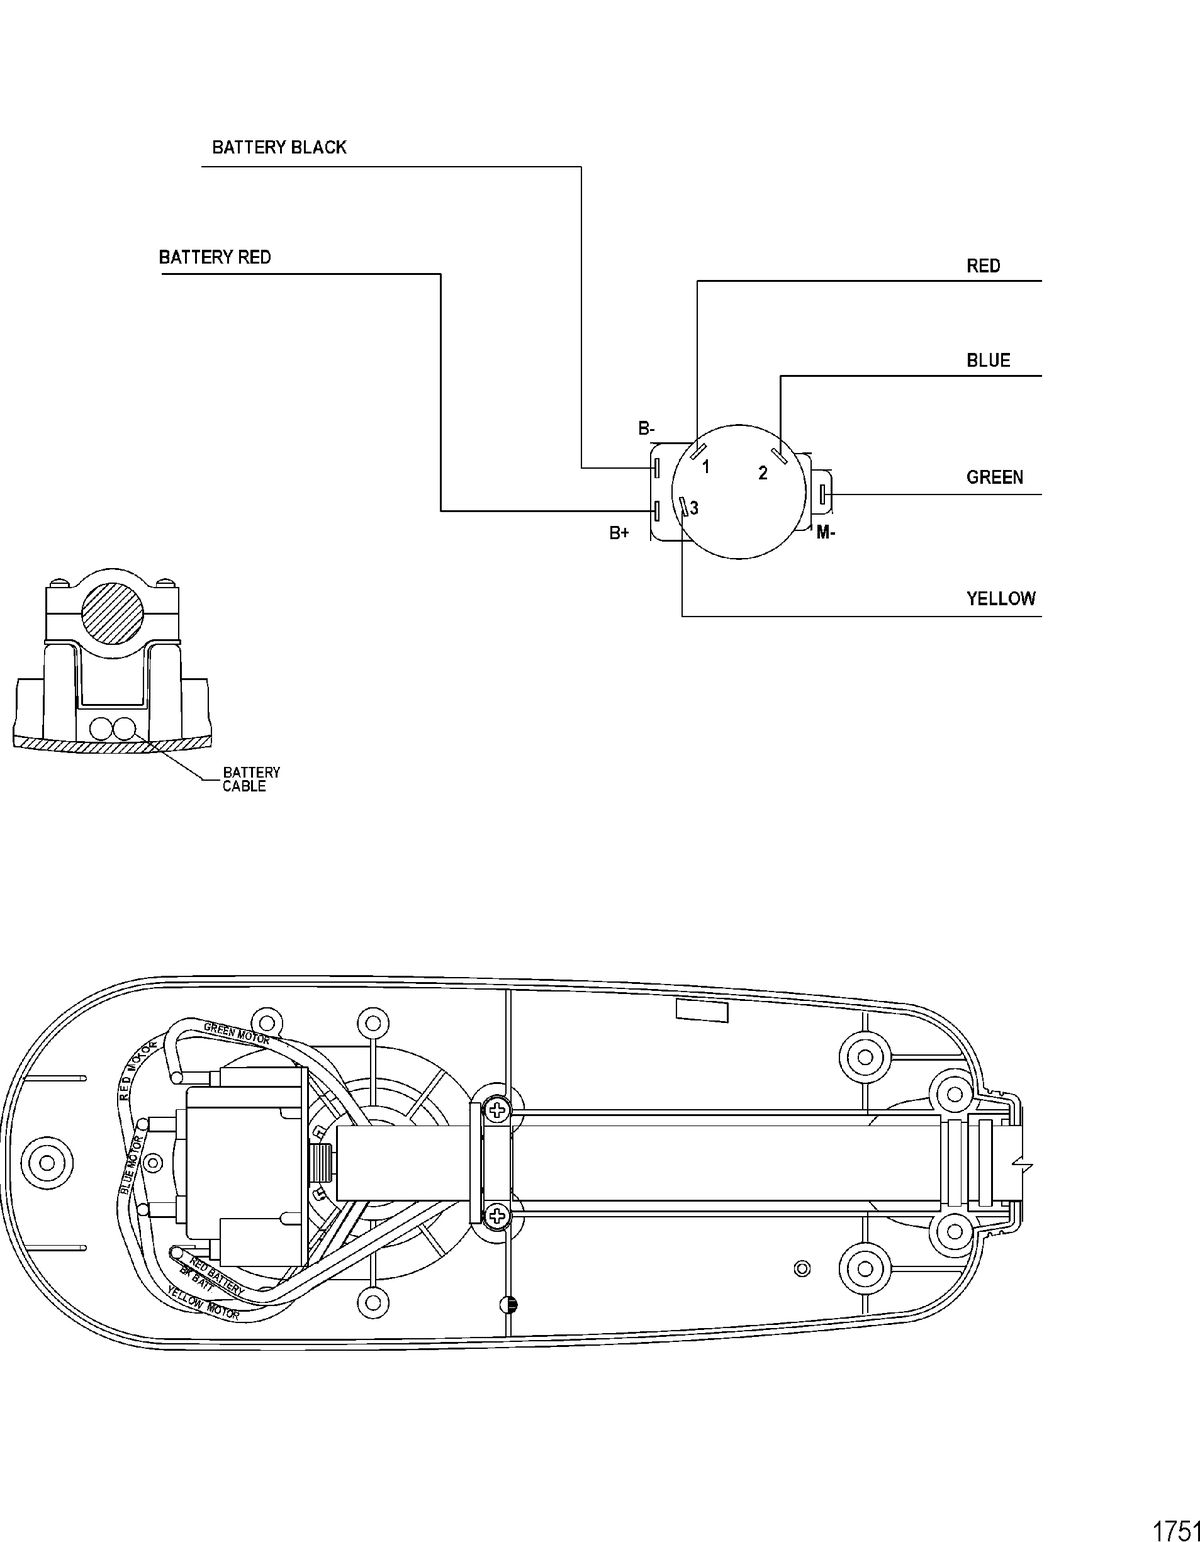 TROLLING MOTOR MOTORGUIDE TT THRUSTER SERIES Wire Diagram(Model TT2500) (12 Volt)